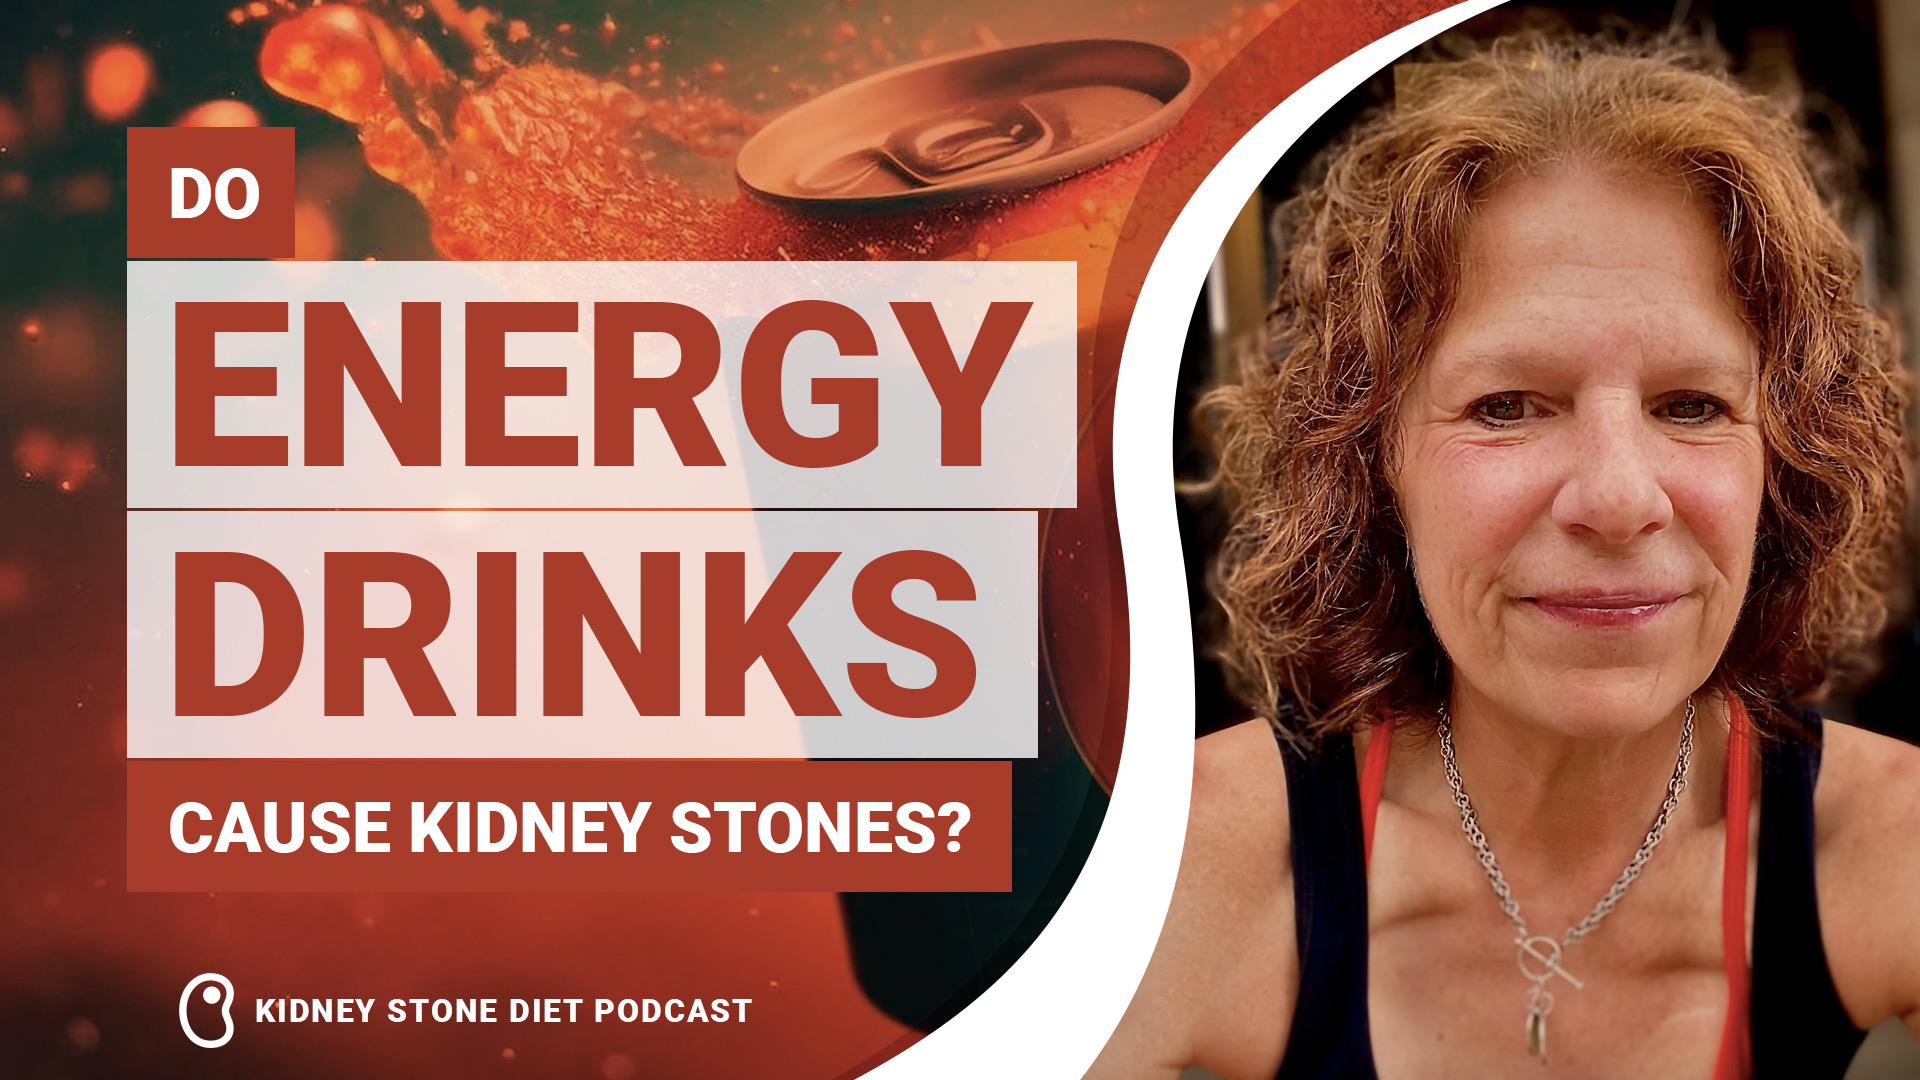 Do energy drinks cause kidney stones?